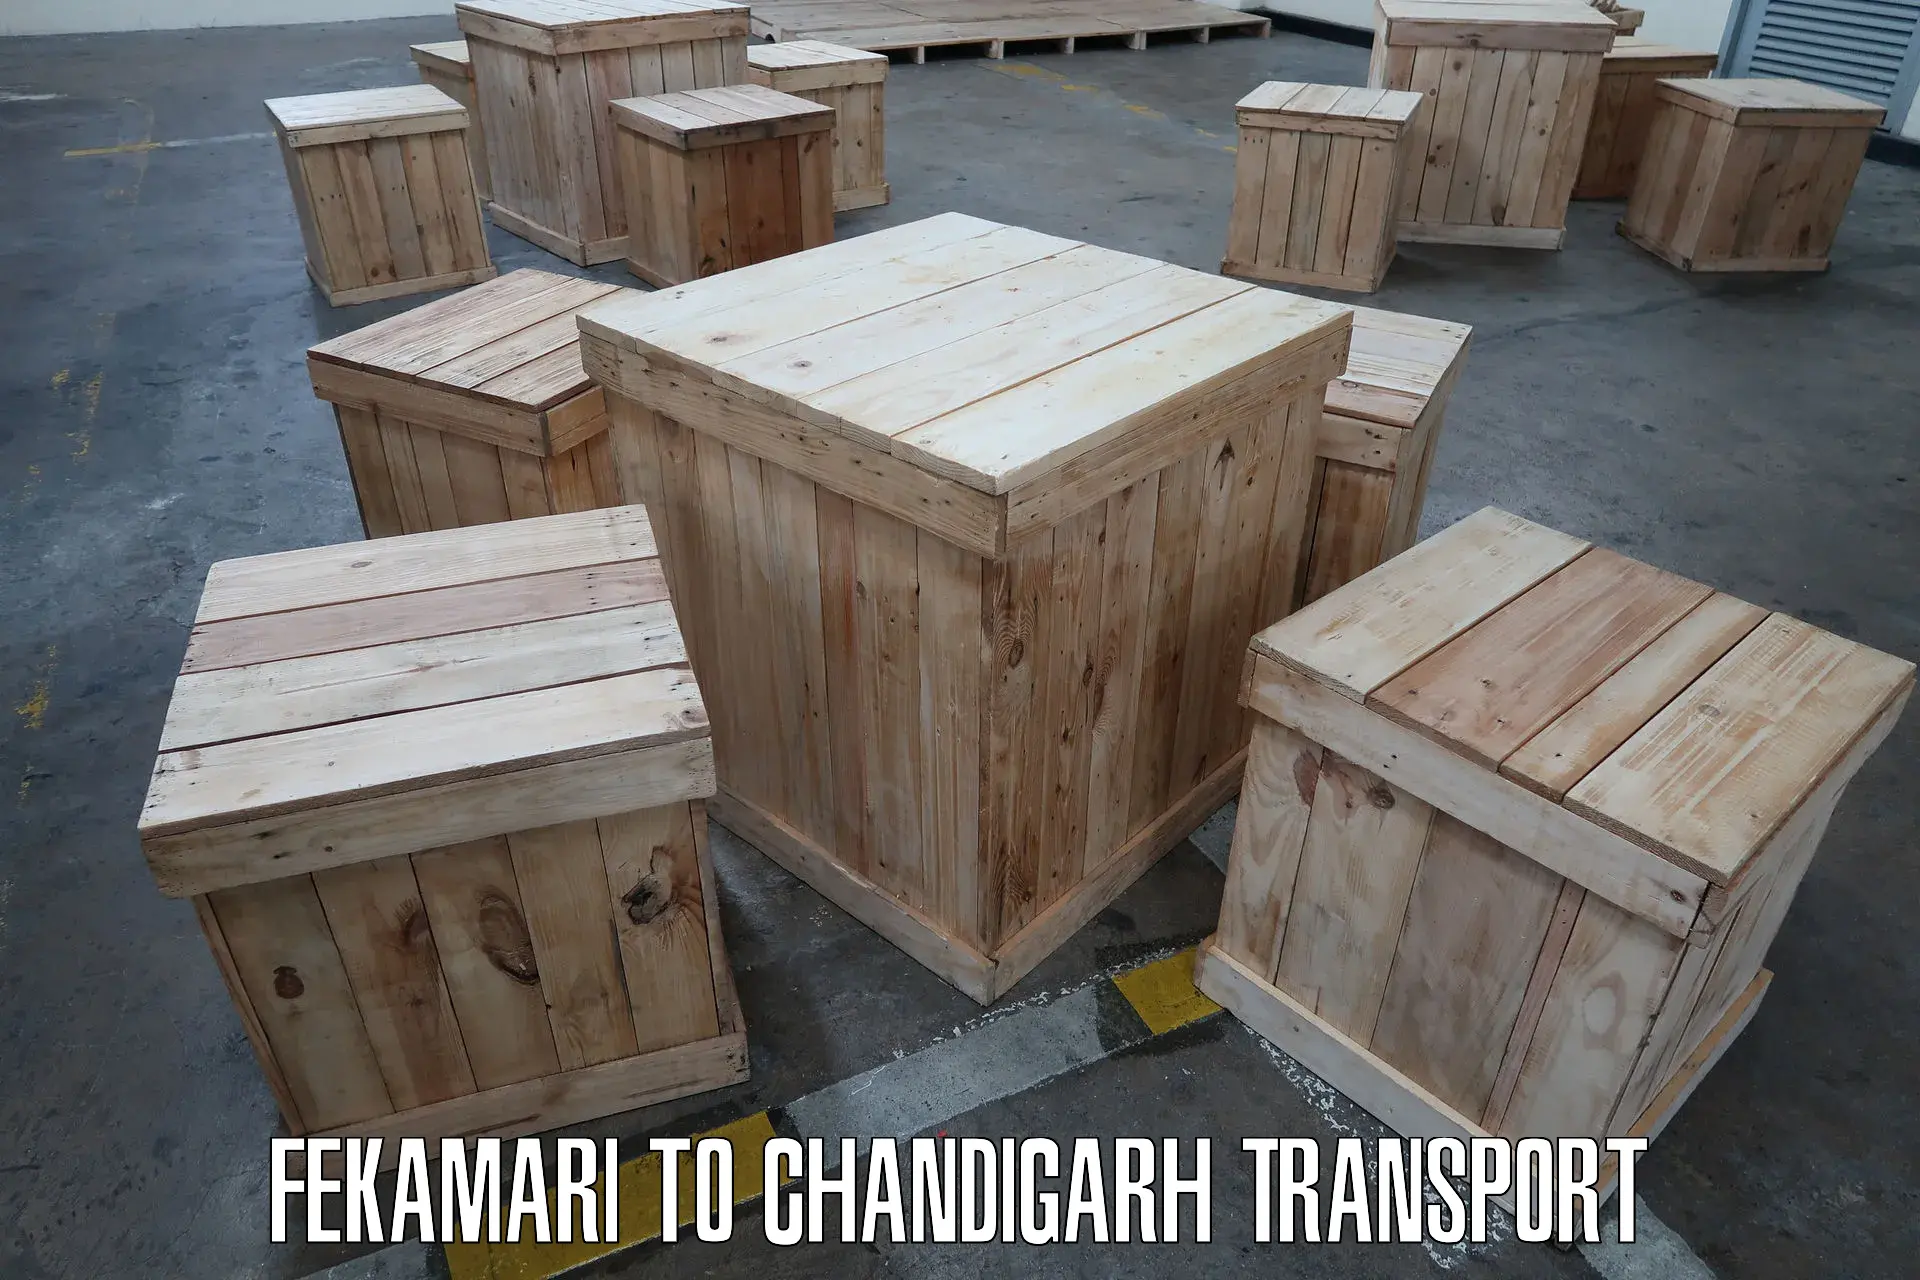 Air freight transport services Fekamari to Chandigarh